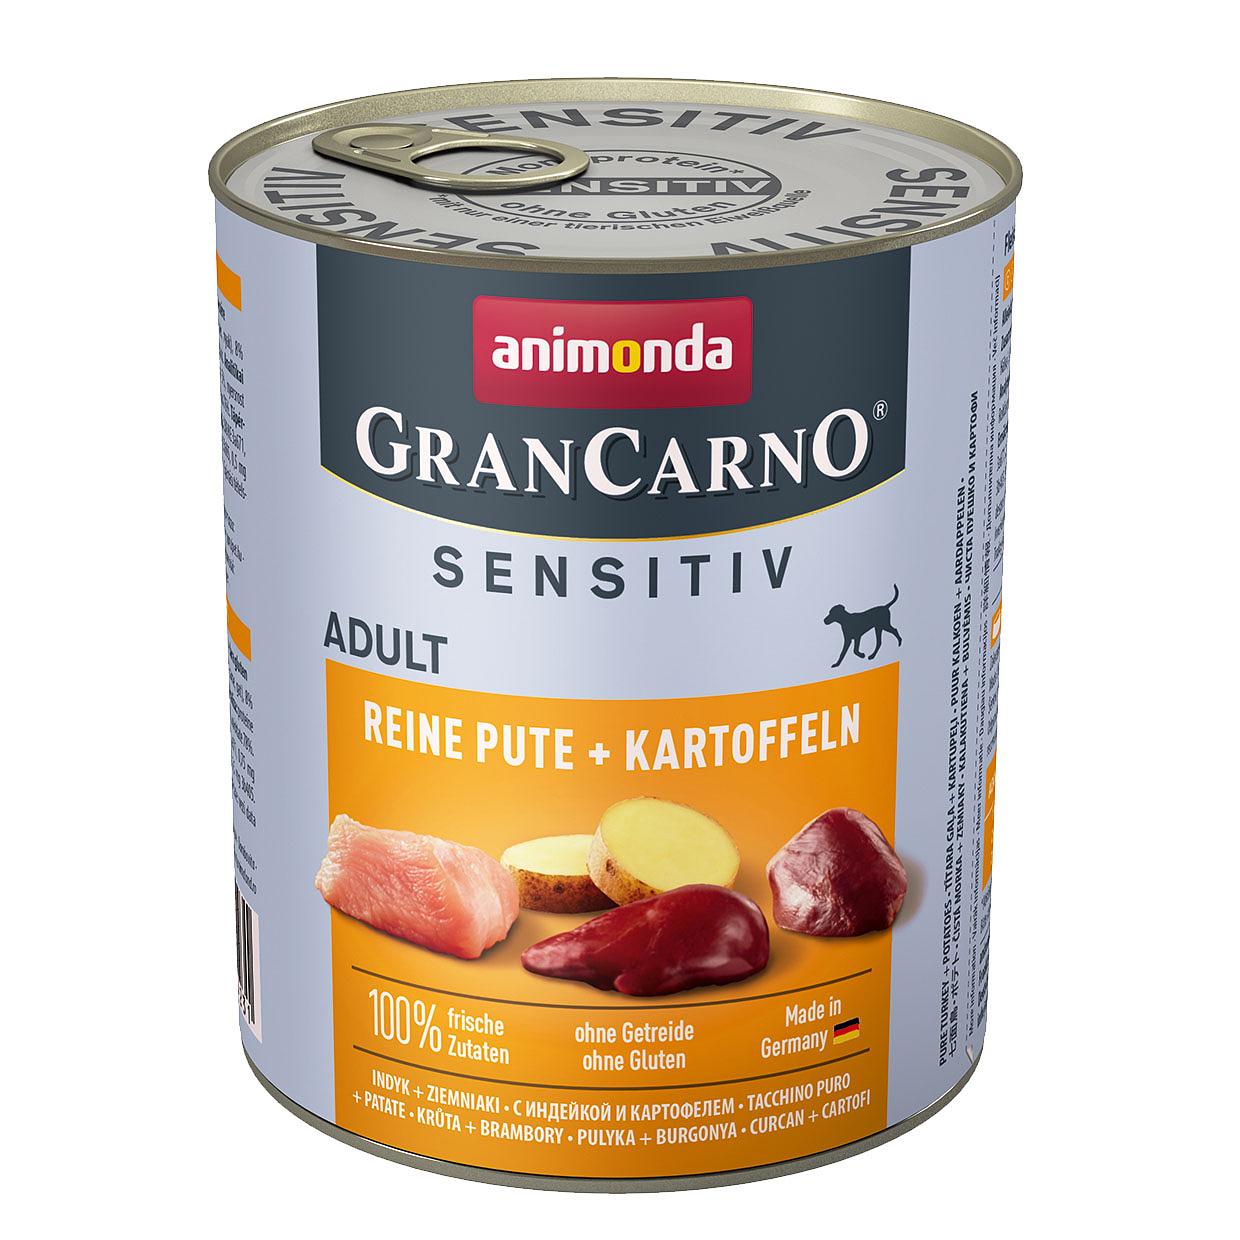 GranCarno Adult Sensitiv Pute & Kartoffeln, 800g